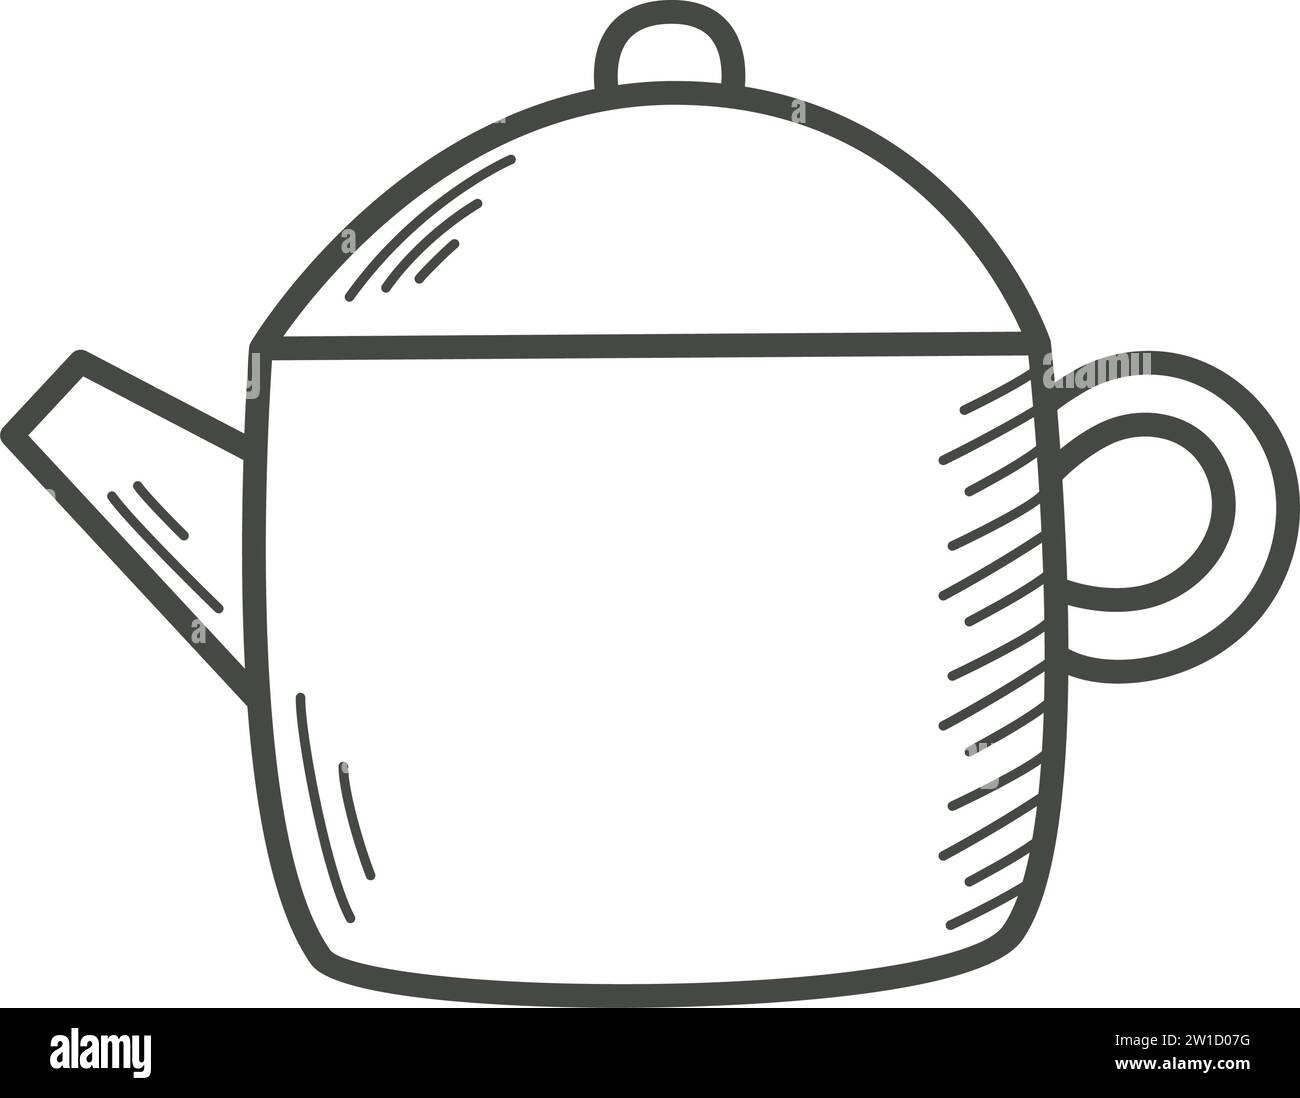 Glas-Teekanne mit Kritzelung, Sketch-Stil, Clip-Art. Teekessel, einfache isolierte Vektor-Illustration. Küchenutensil Artikel Tintenkontur Stock Vektor